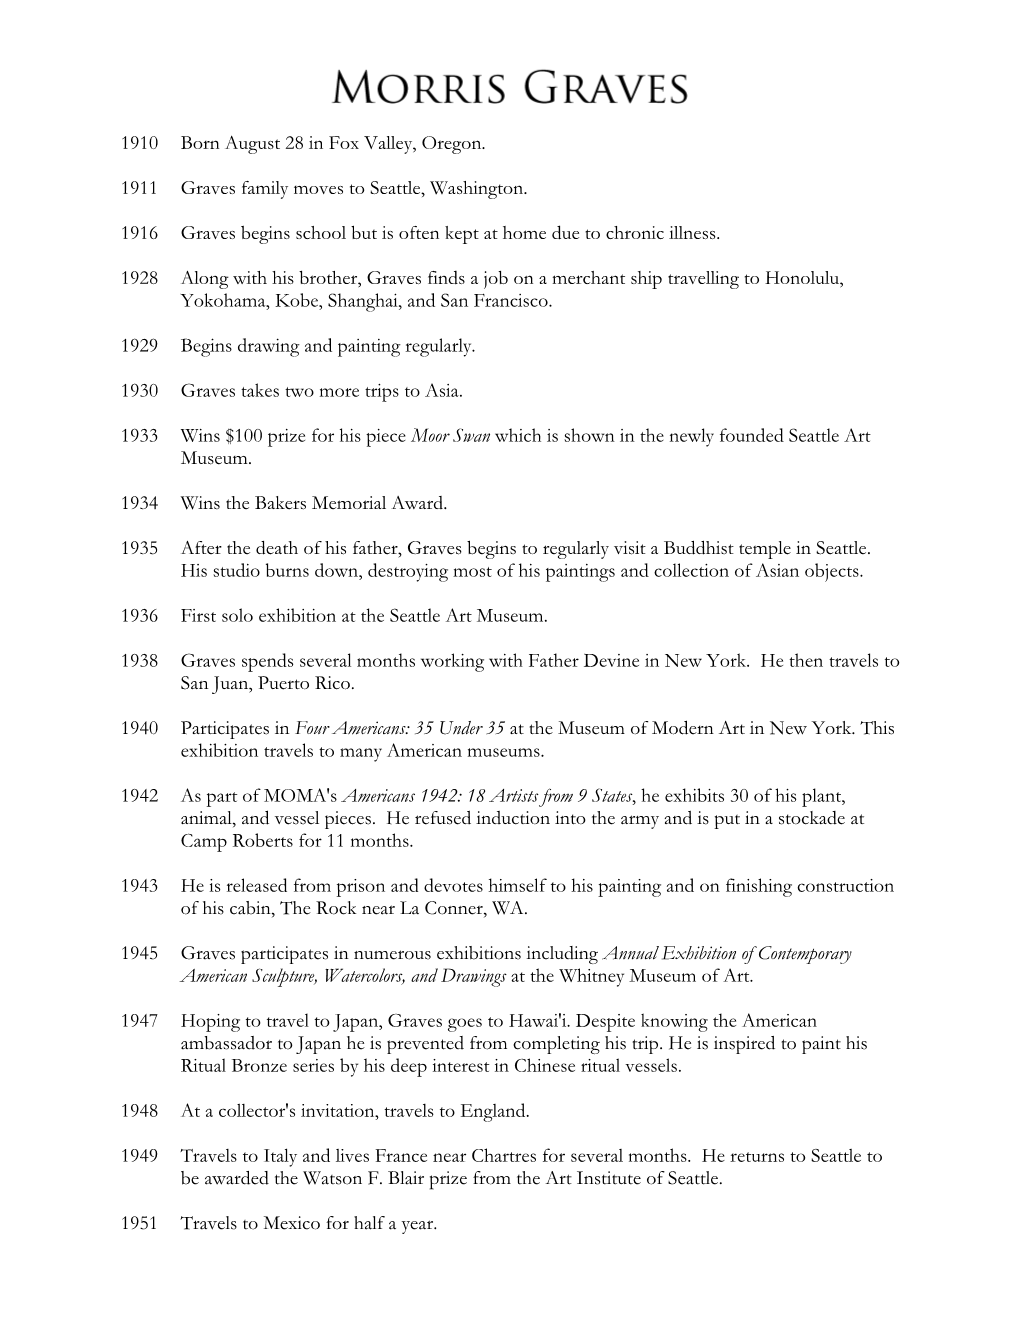 PDF of Chronology